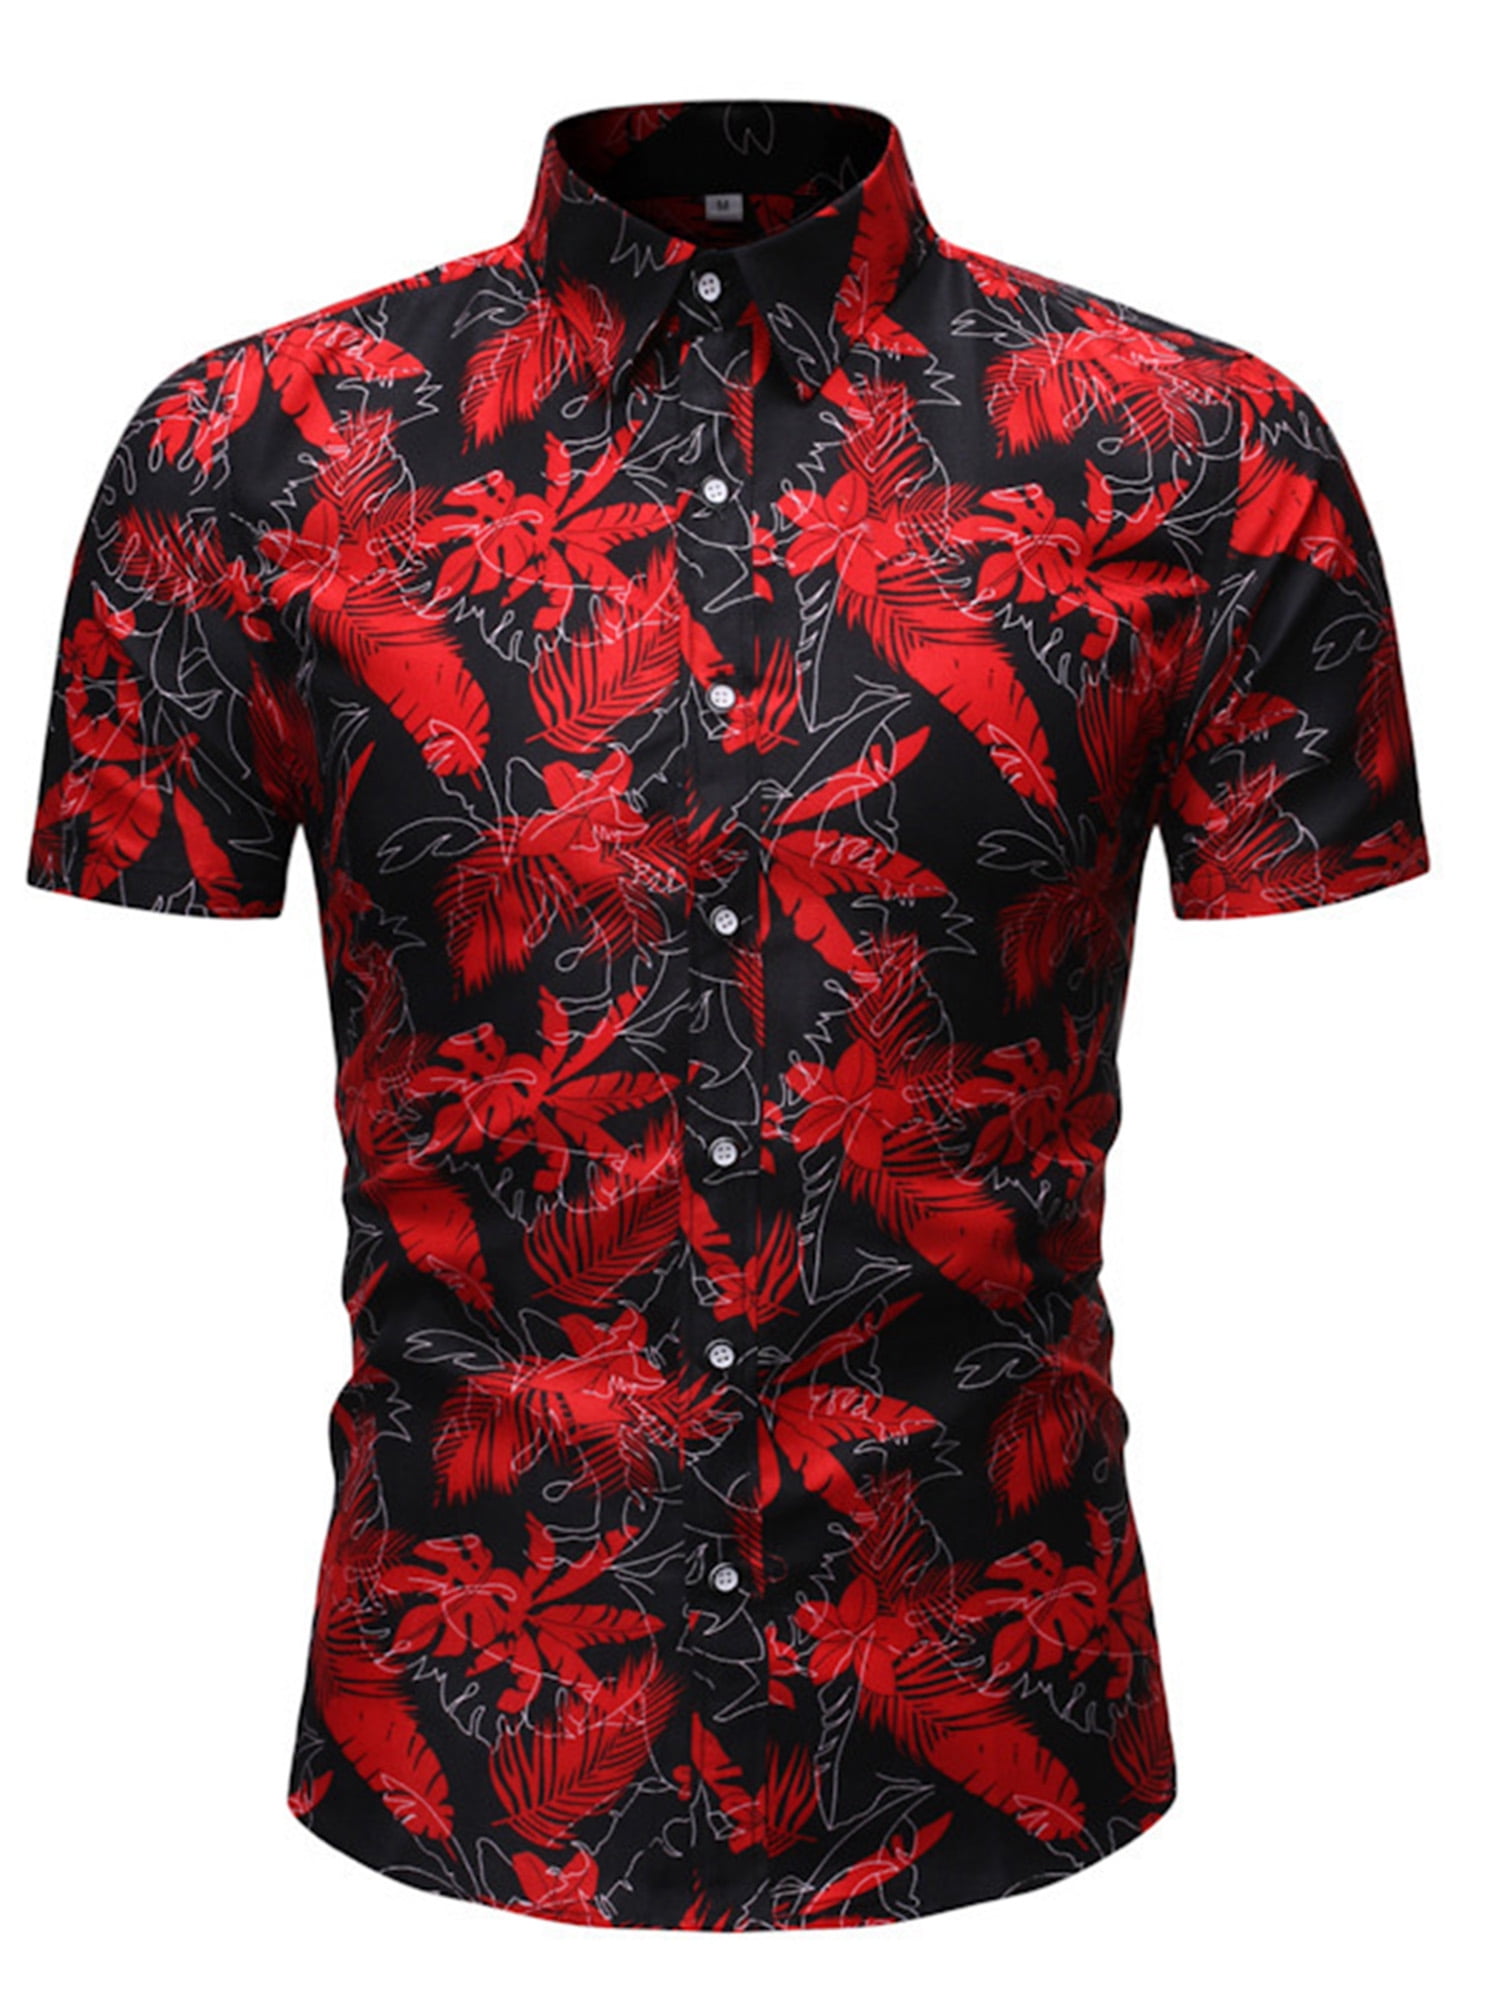 Mens Summer Shirt Short Sleeve Aloha Flower Print Casual Button Down Shirts